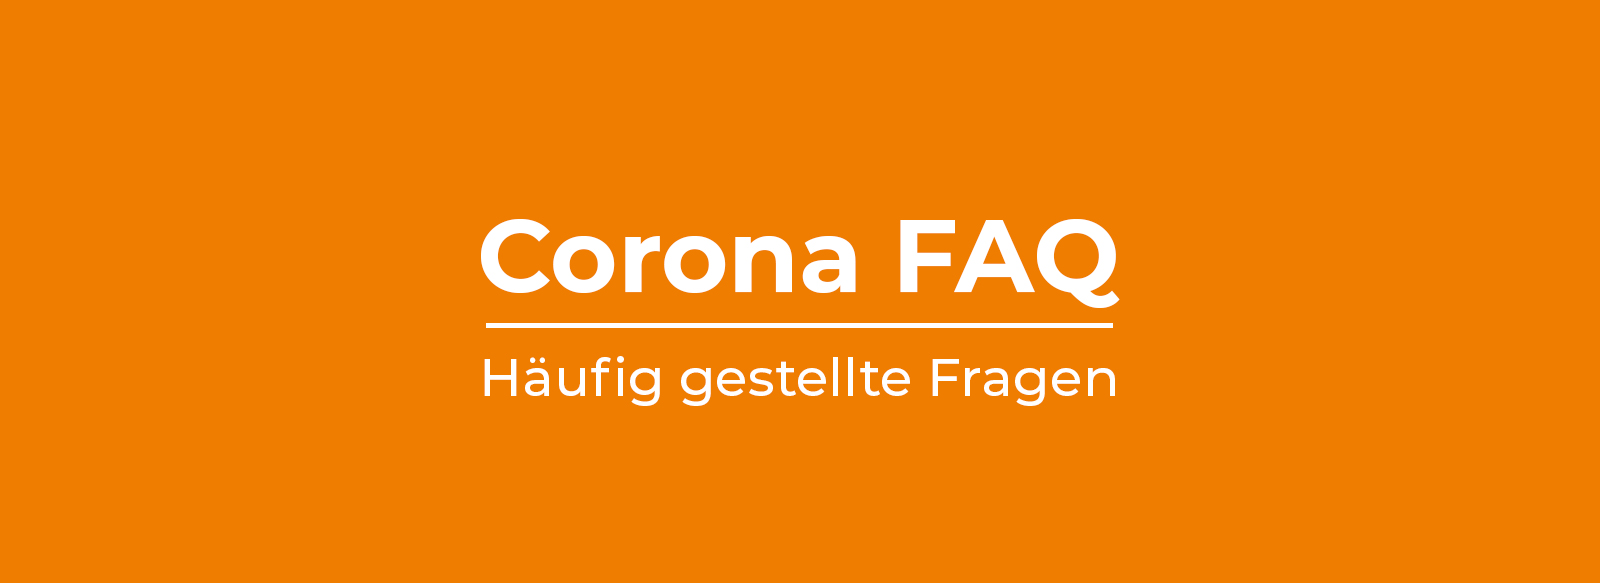 Corona FAQ